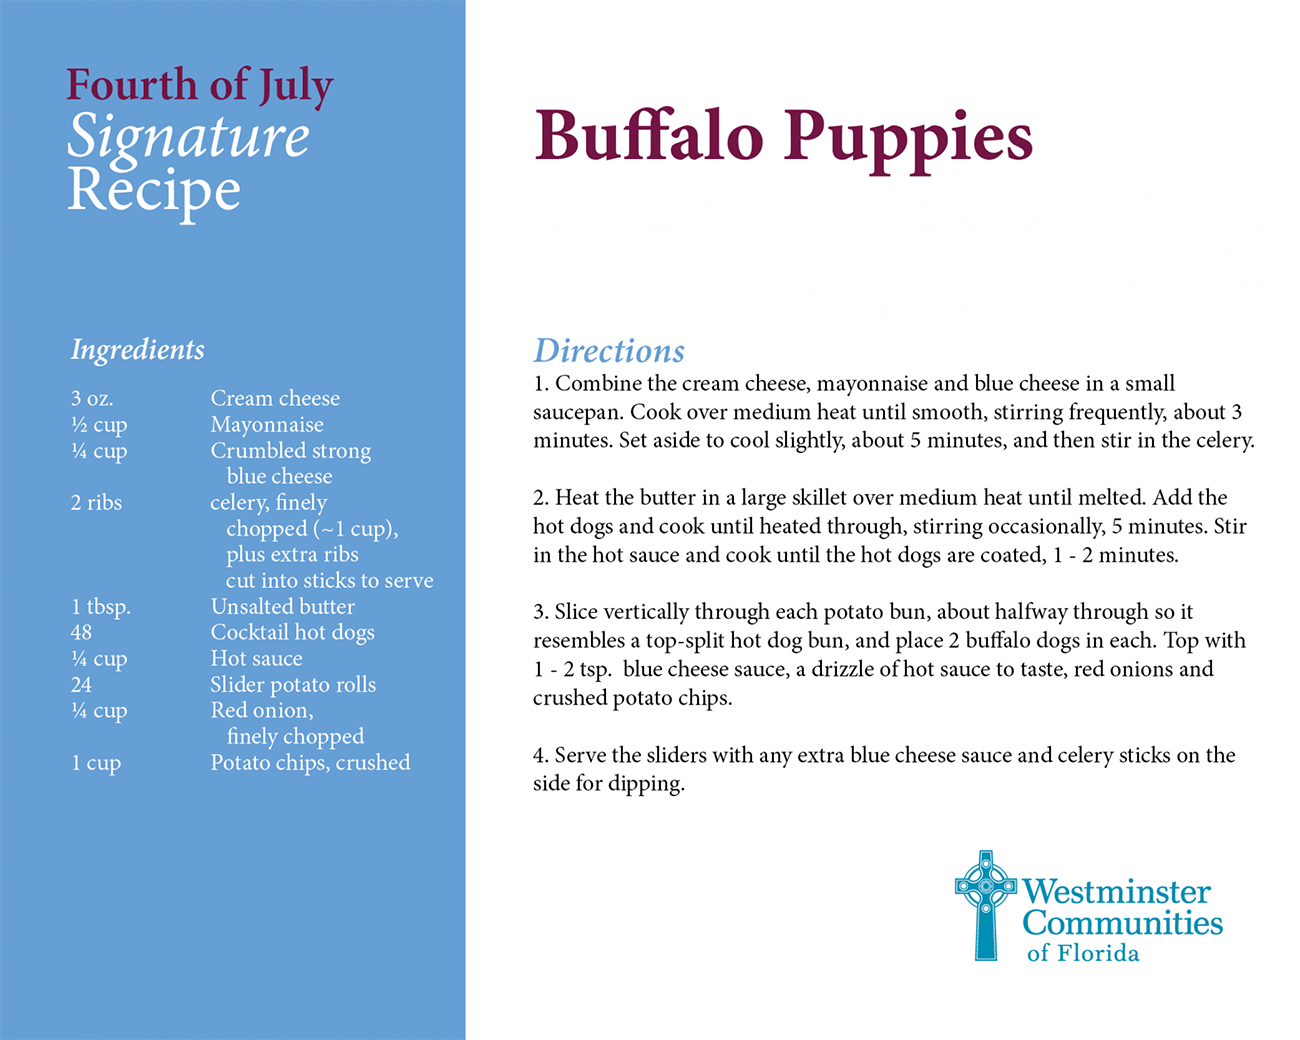 Fourth of July Recipes3 - Buffalo Puppies